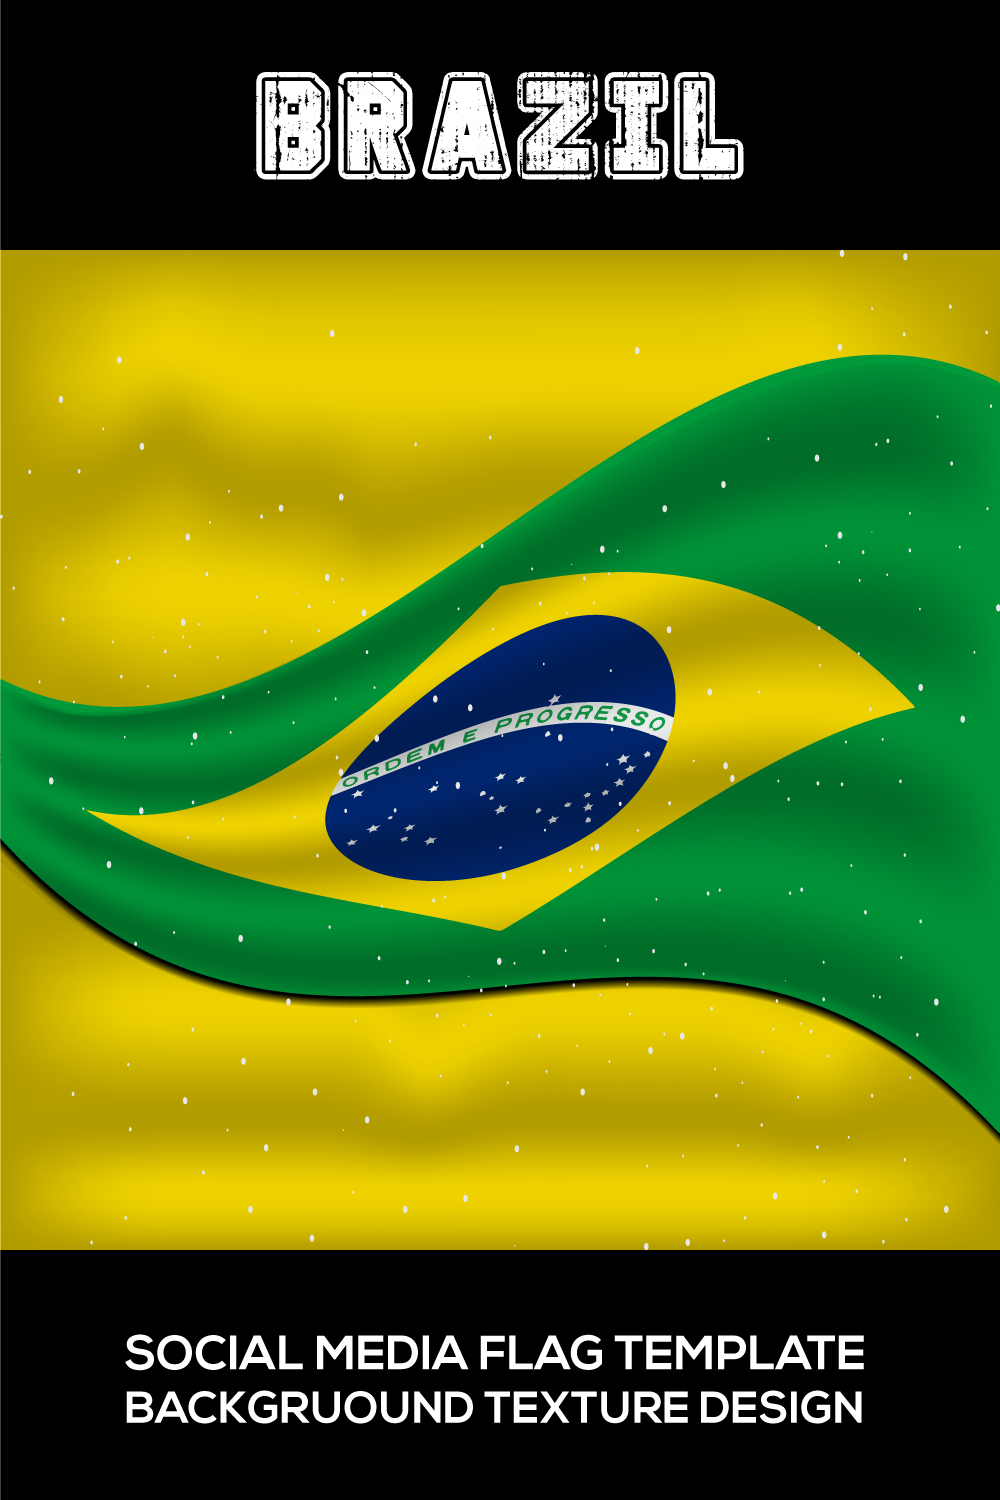 Wonderful image of the flag of Brazil.